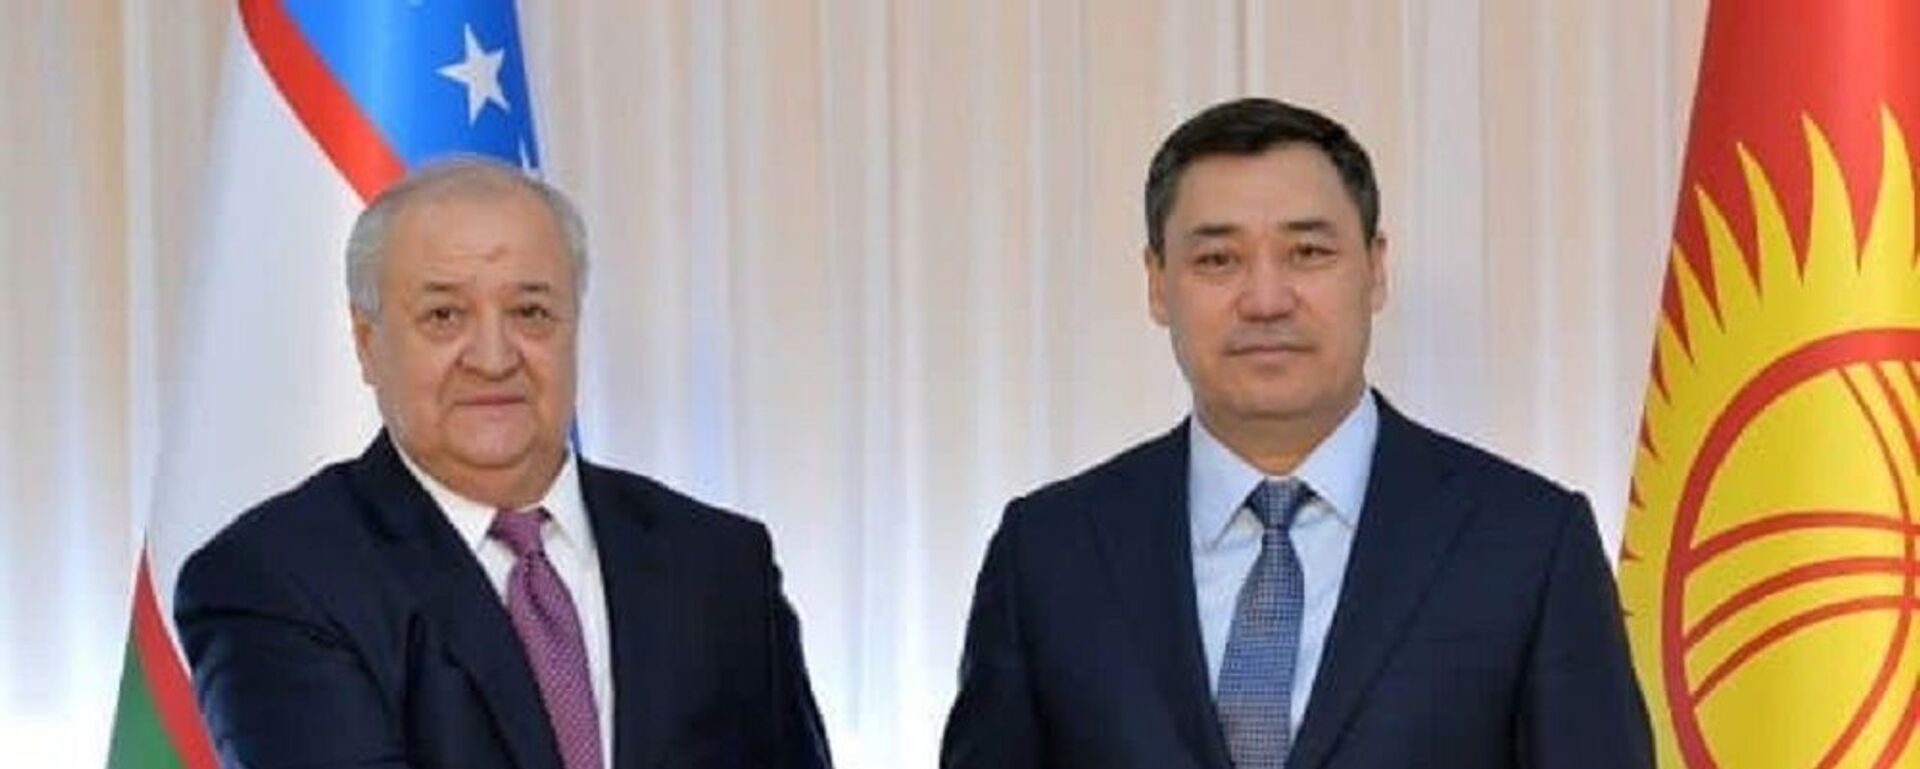 Глава МИД Узбекистана встретился с президентом Кыргызстана - Sputnik Узбекистан, 1920, 27.02.2021